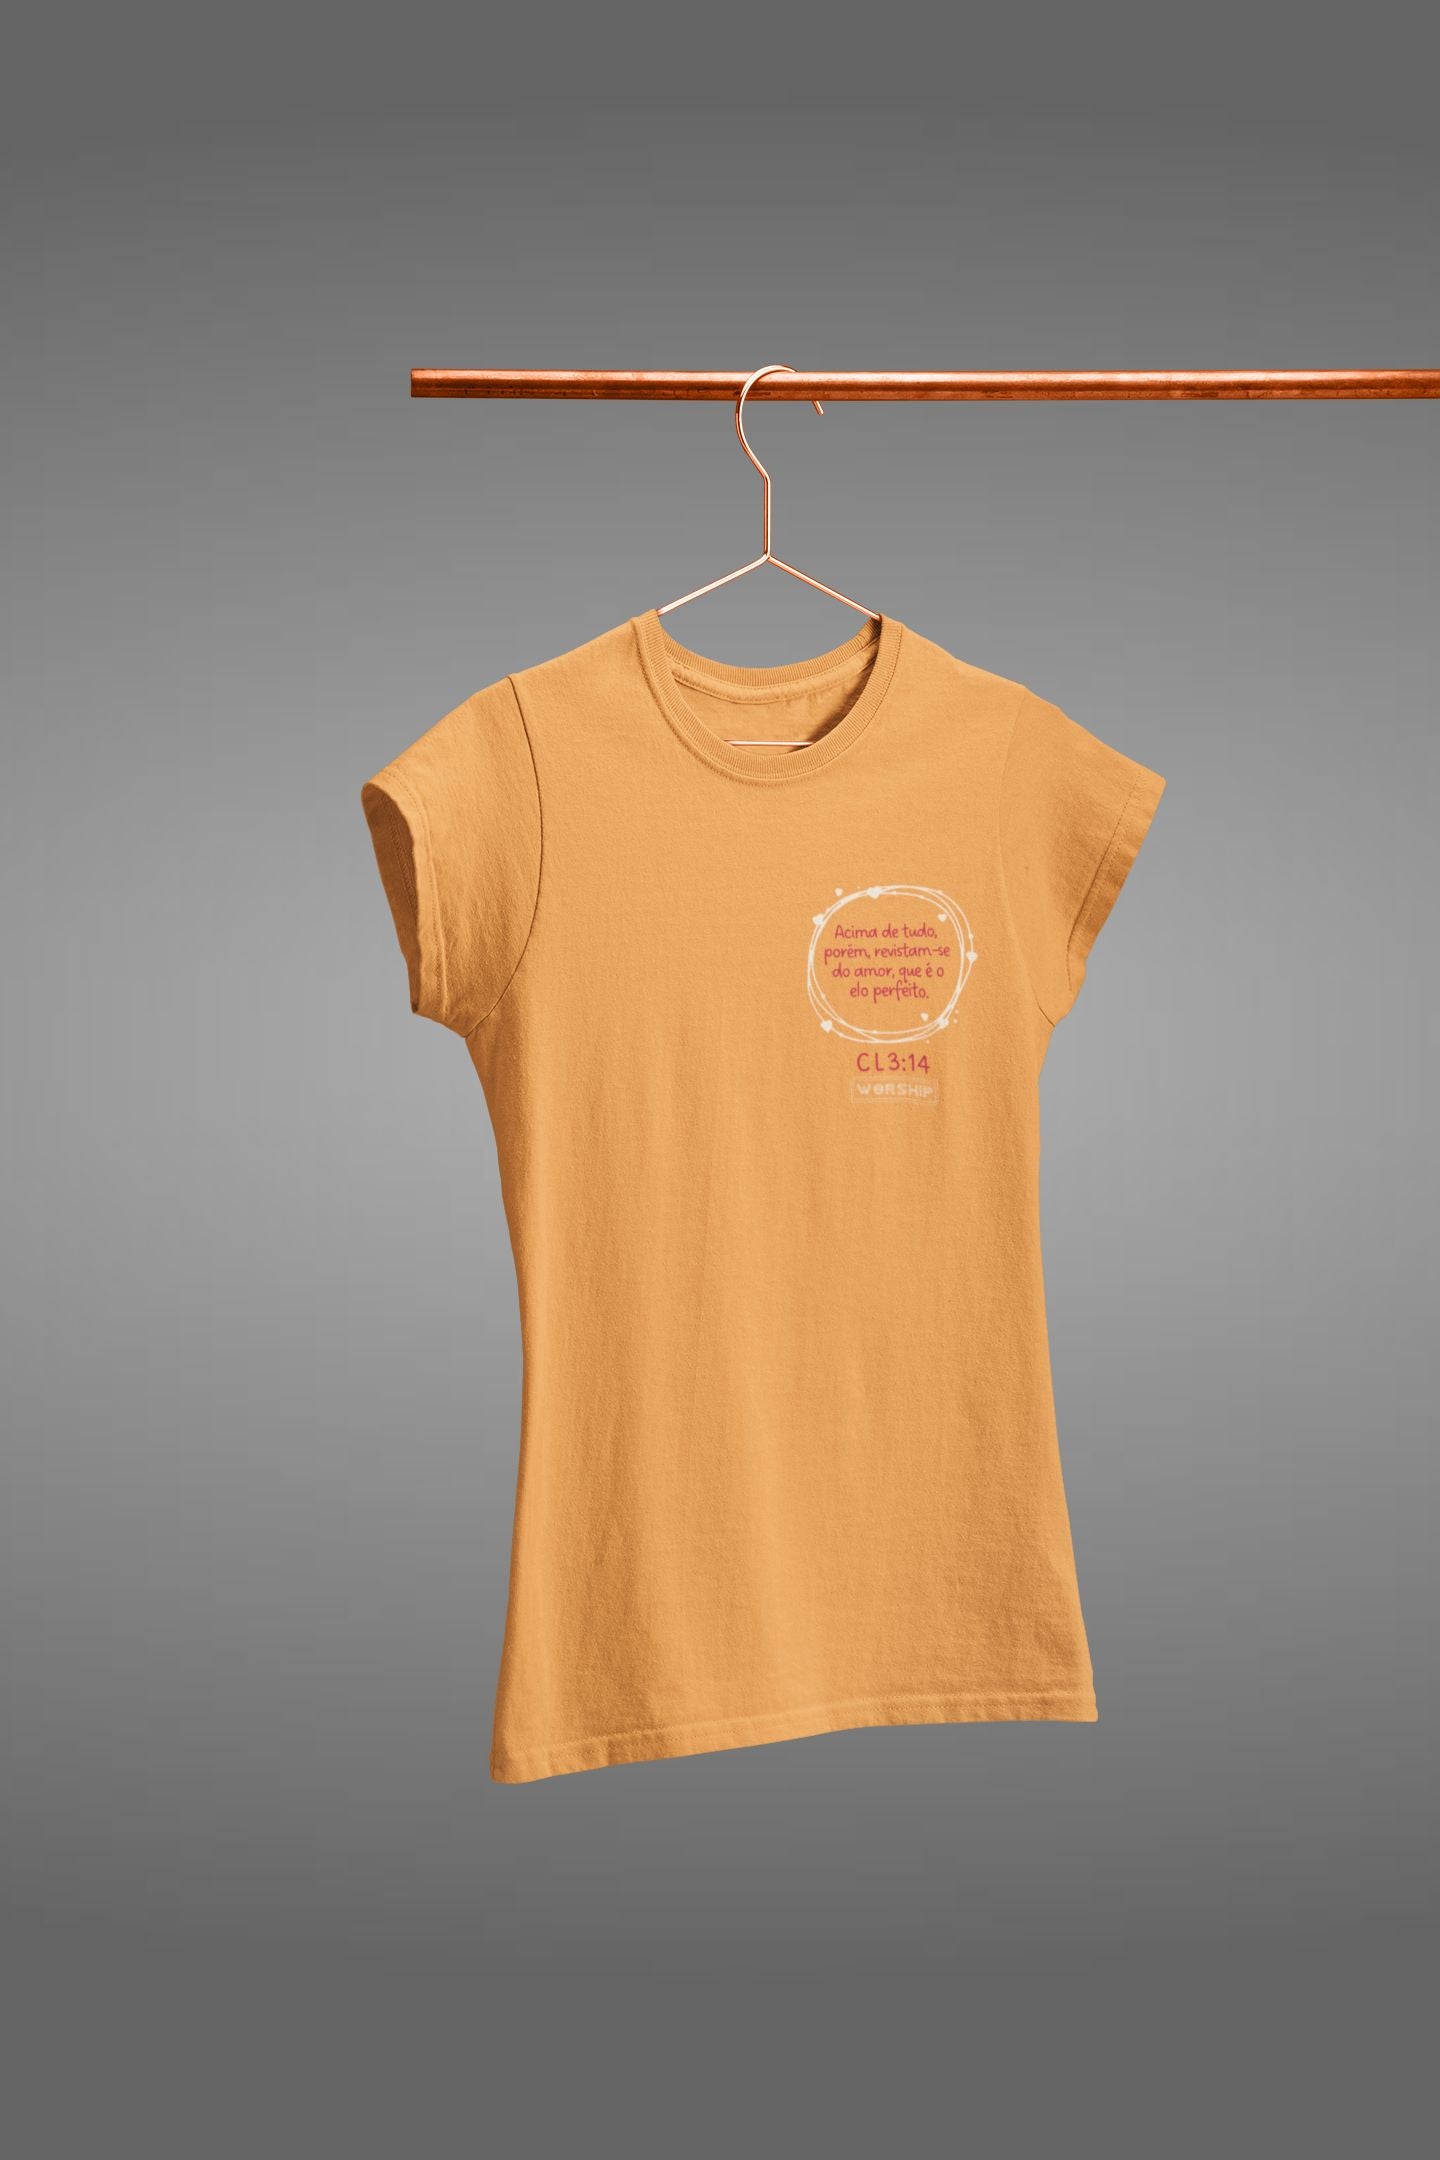 Camiseta Feminina AMOR DE DEUS 2 - estonada e colorida